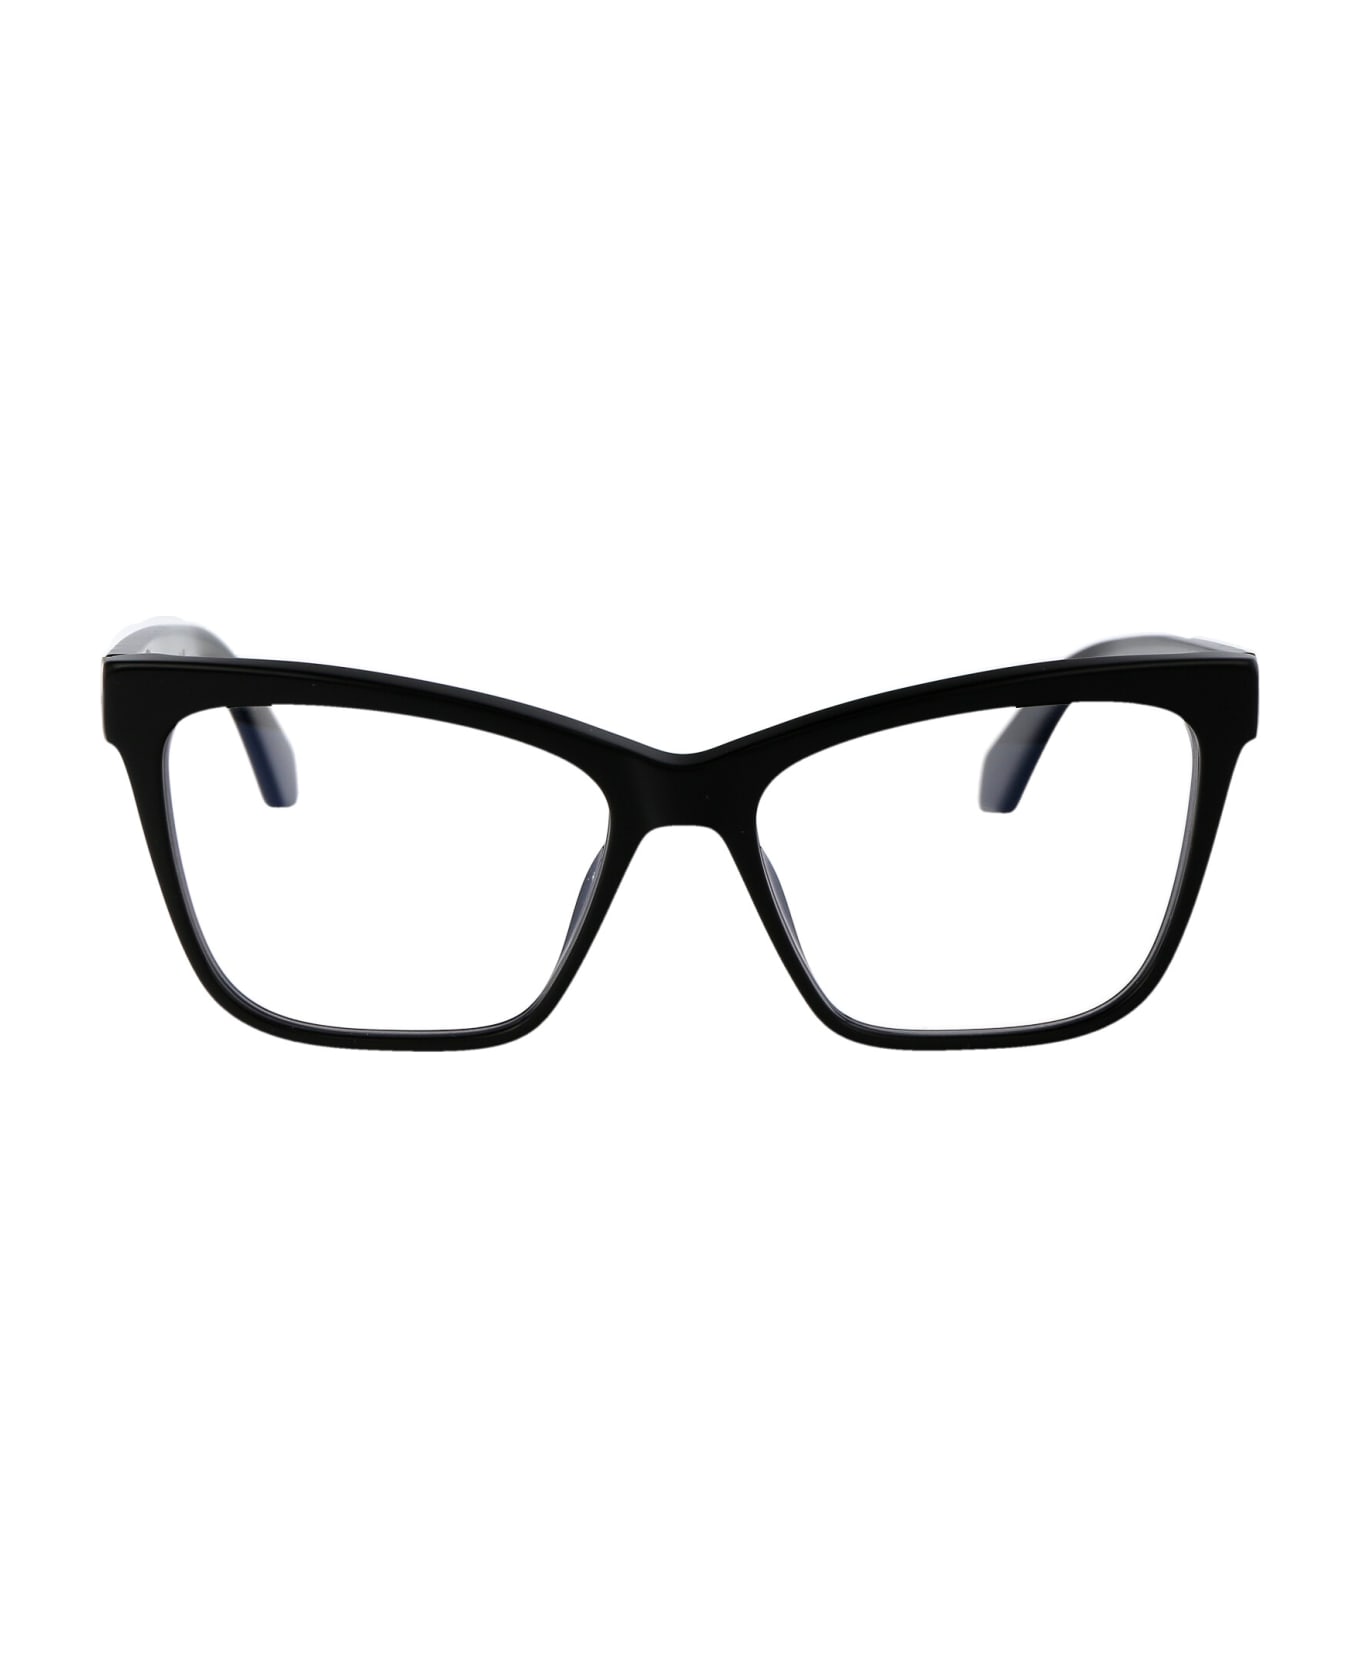 Off-White Optical Style 67 Glasses - 1000 BLACK